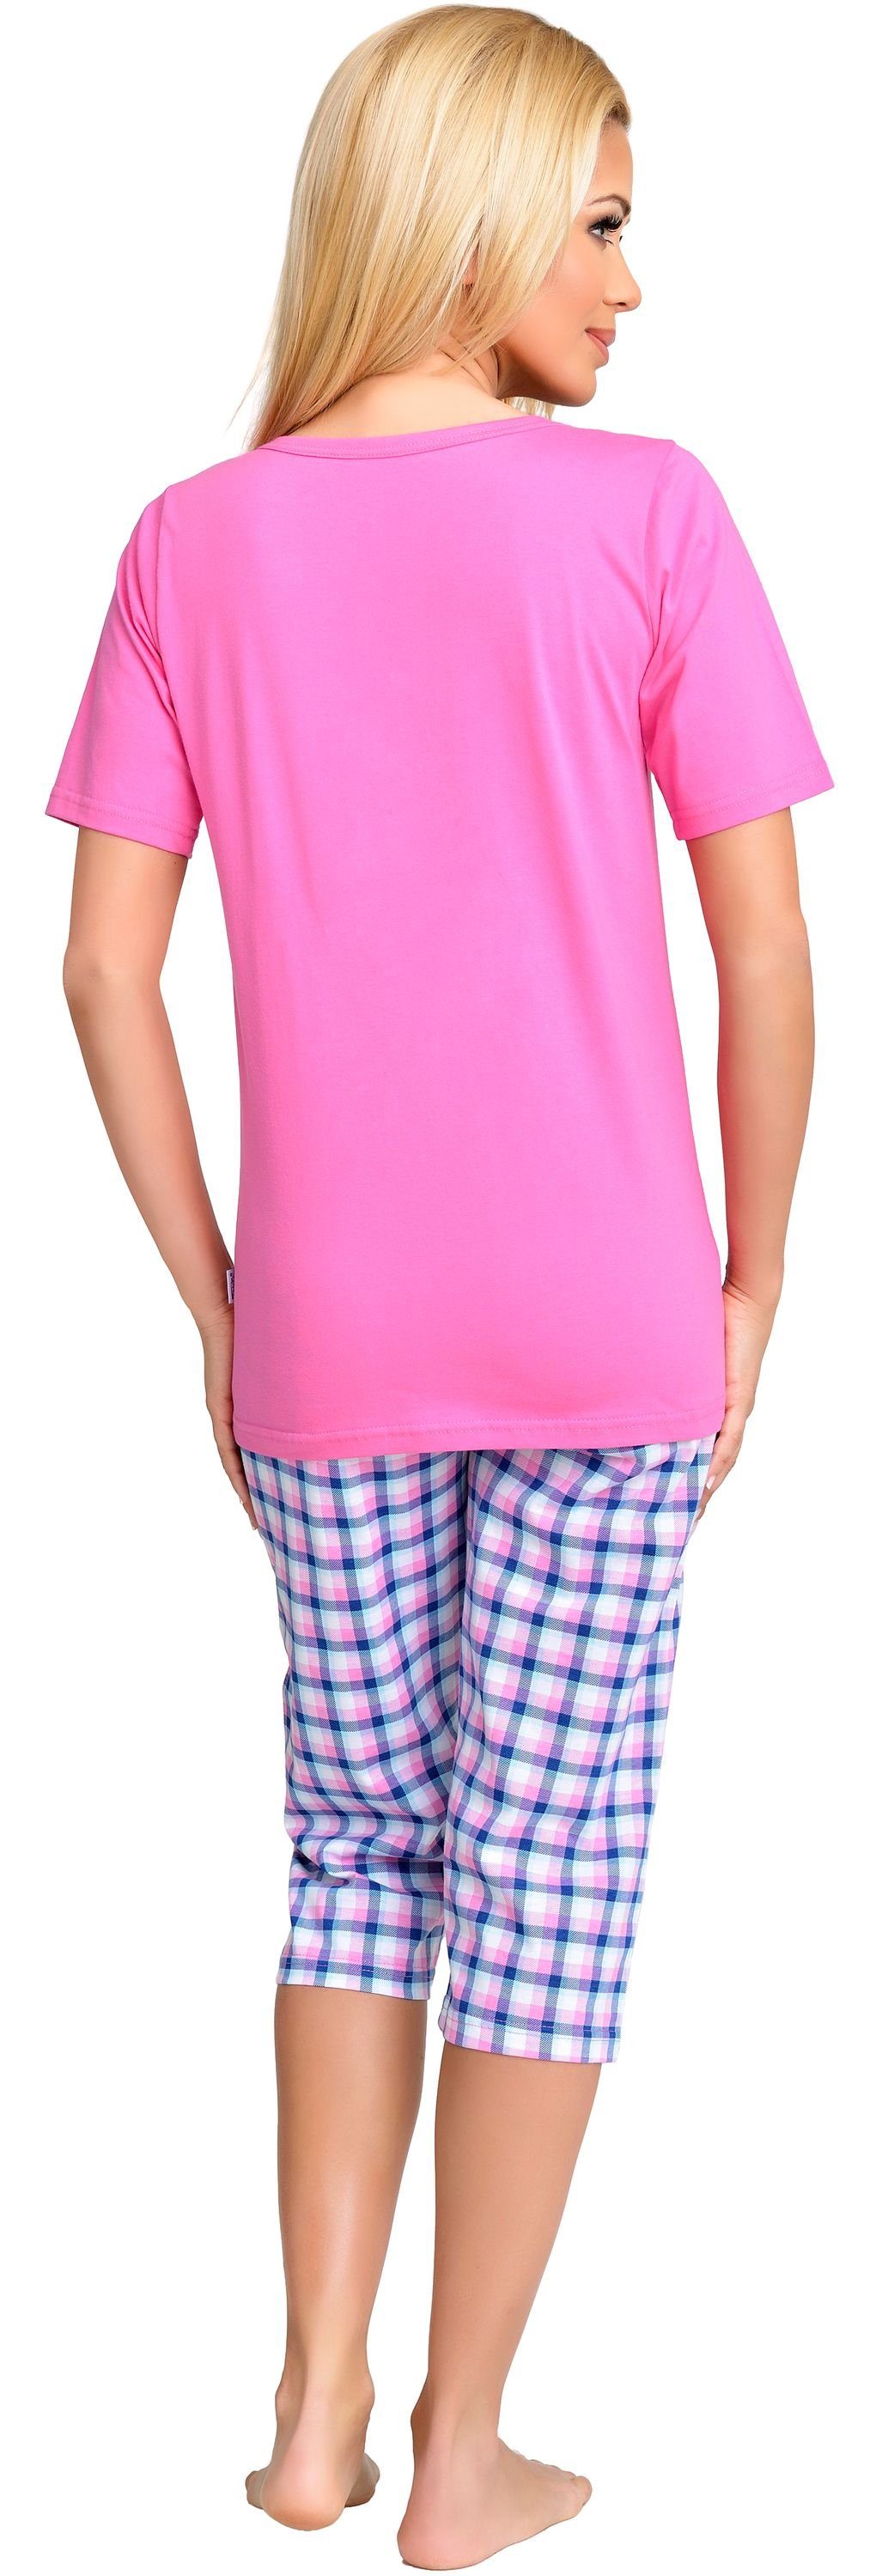 Be Mammy Umstandspyjama Damen Schlafanzug Stillpyjama Rosa-1 H2L2N2